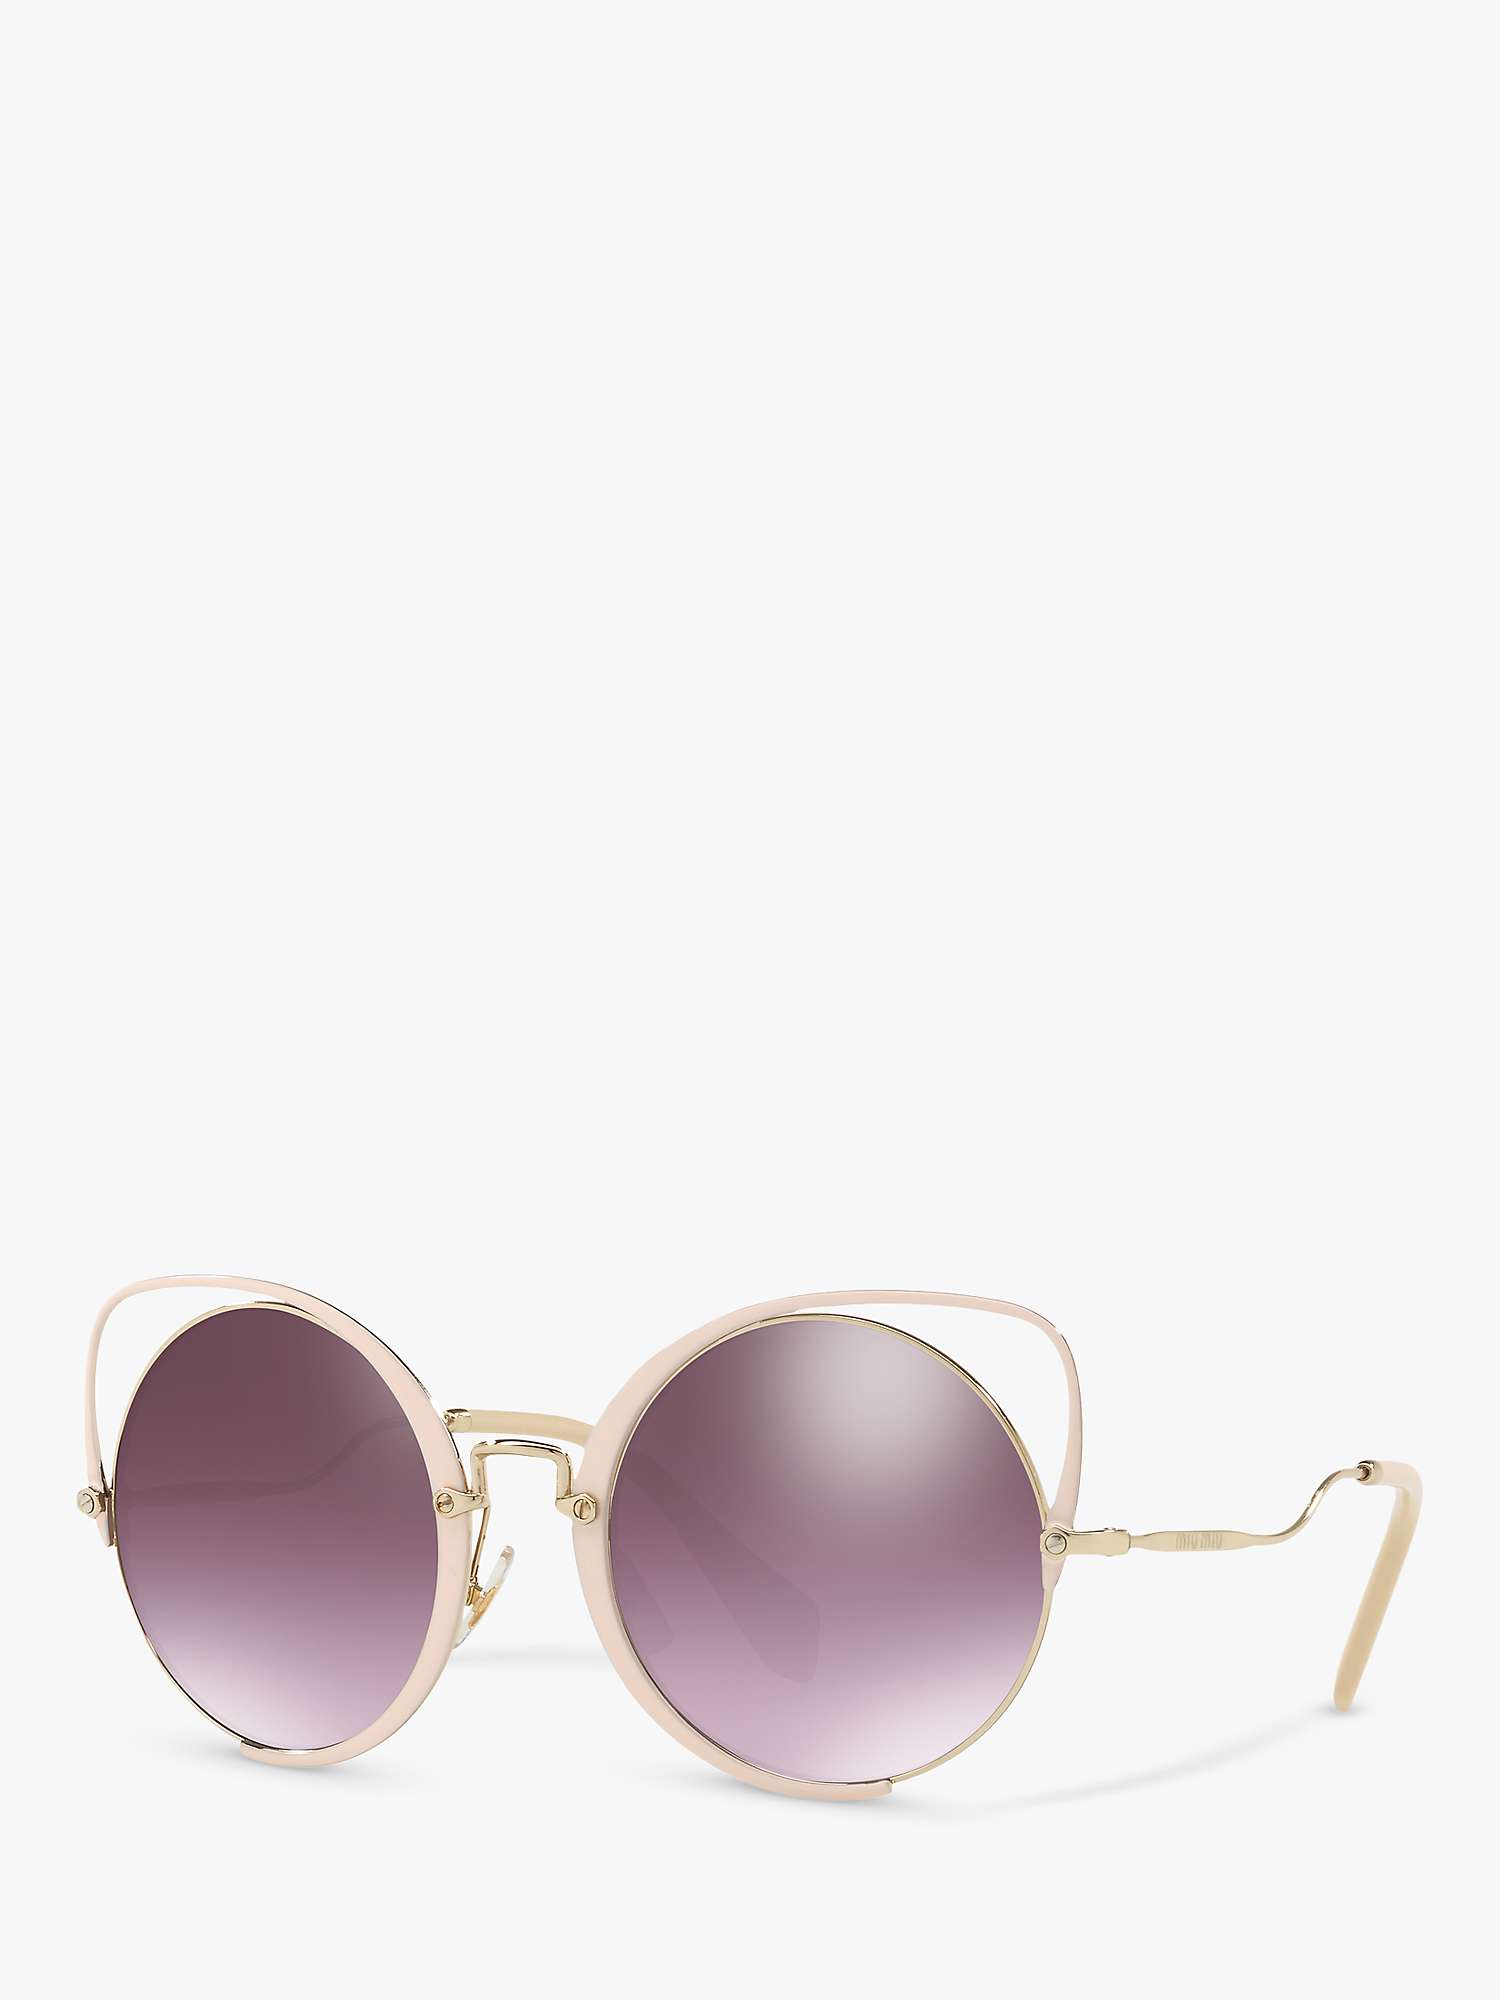 Buy Miu Miu MU 51TS Women's Irregular Sunglasses, Gold/Mirror Purple Online at johnlewis.com